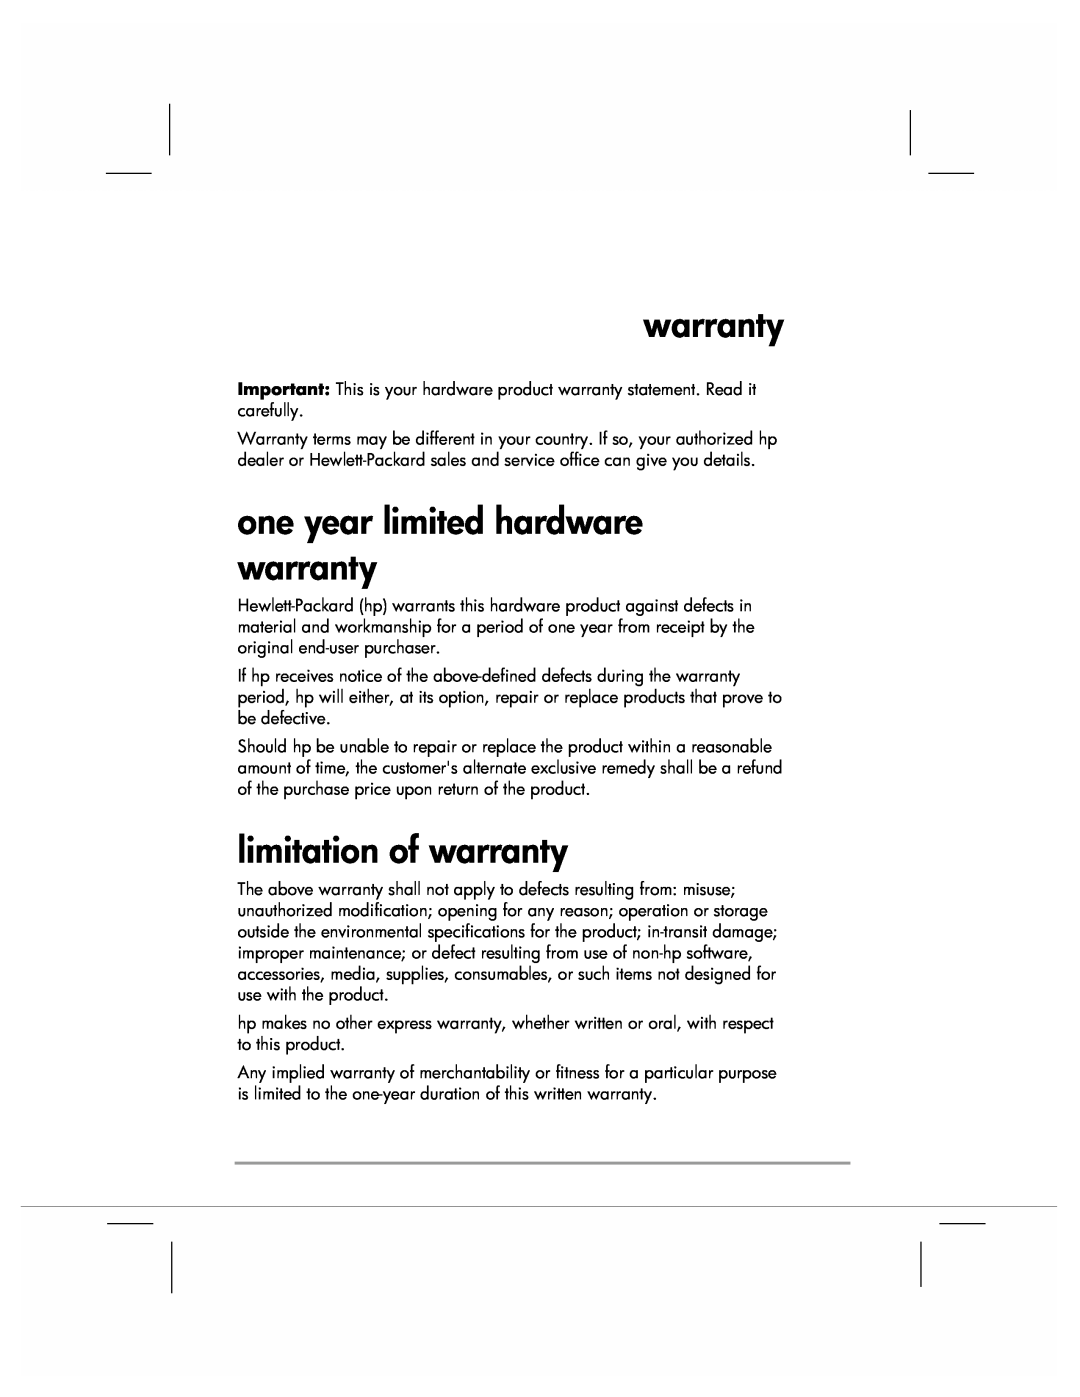 HP 920 manual one year limited hardware warranty, limitation of warranty 